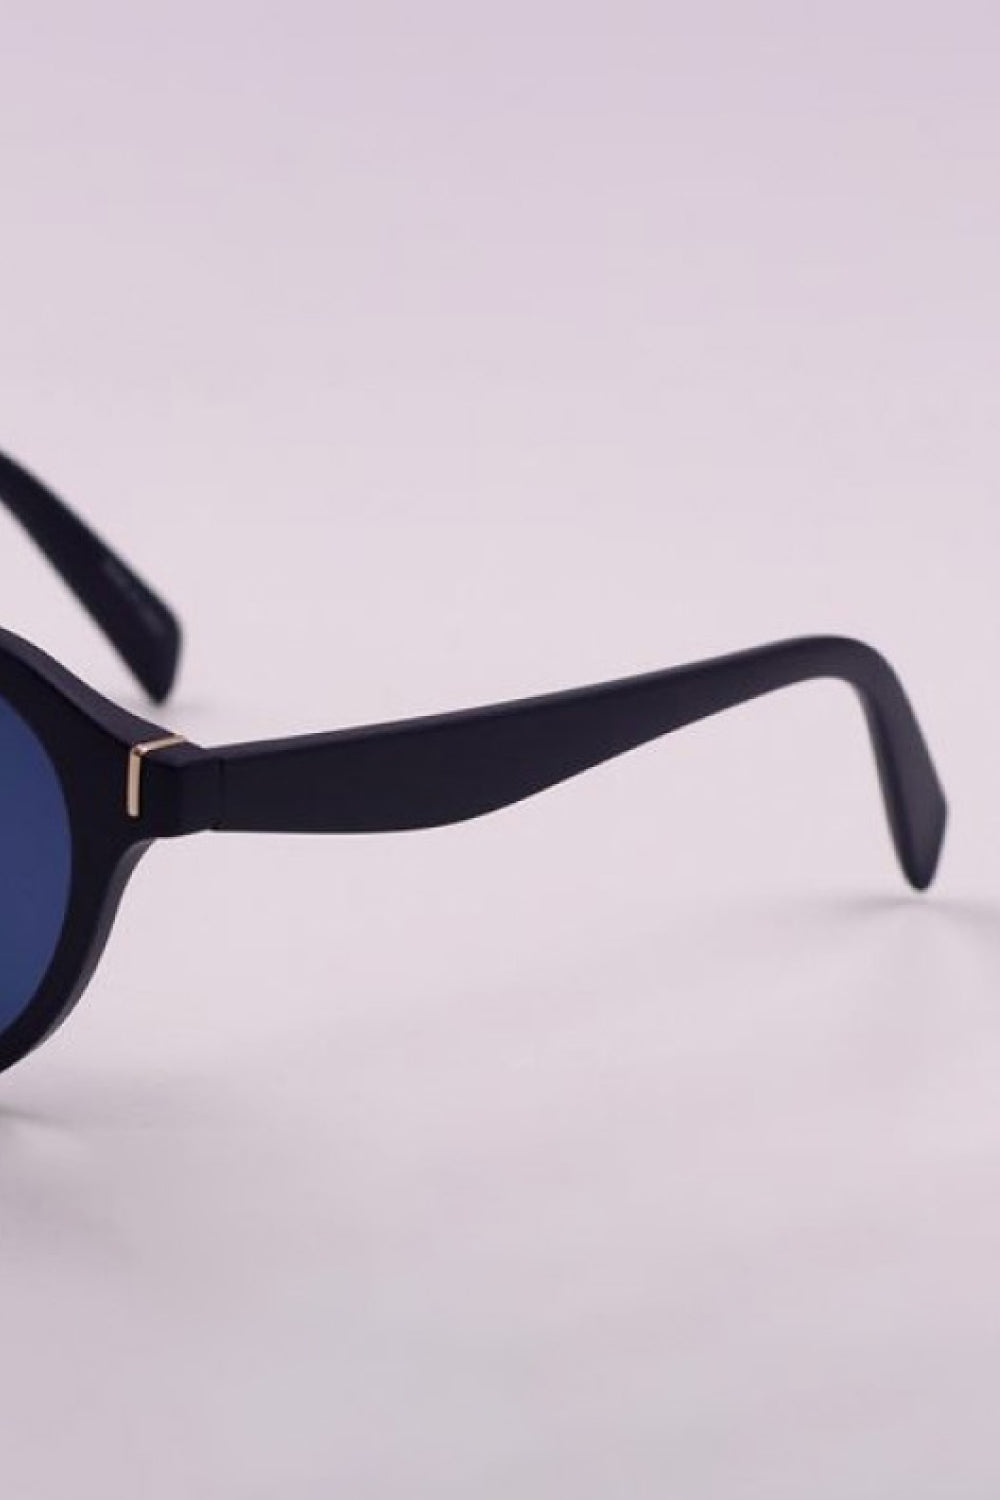 Women’s 3-Piece Round Polycarbonate Full Rim Sunglasses